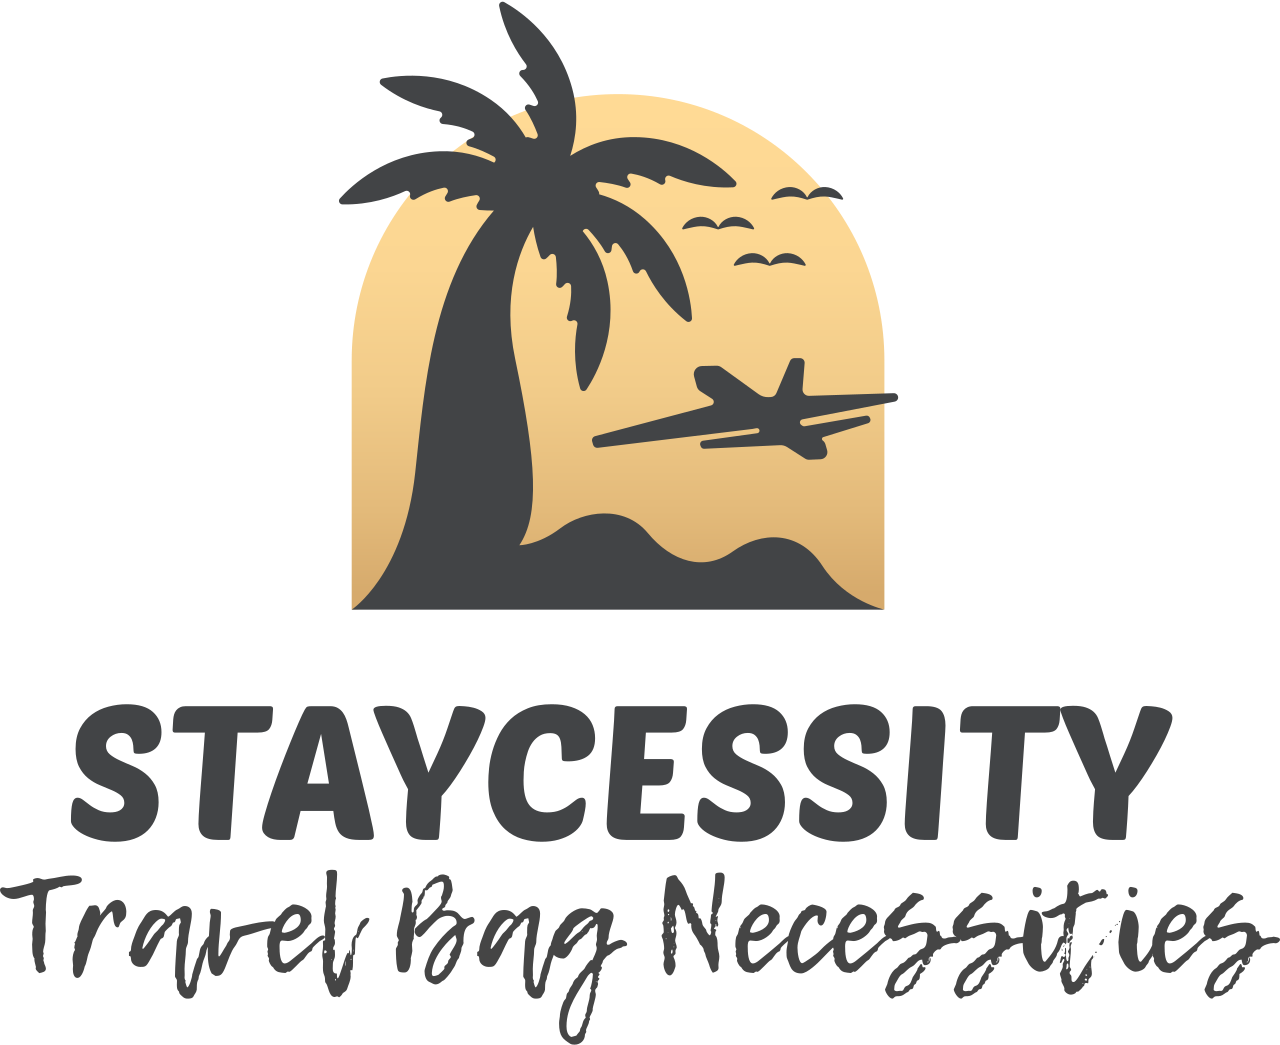 StayCessity's web page